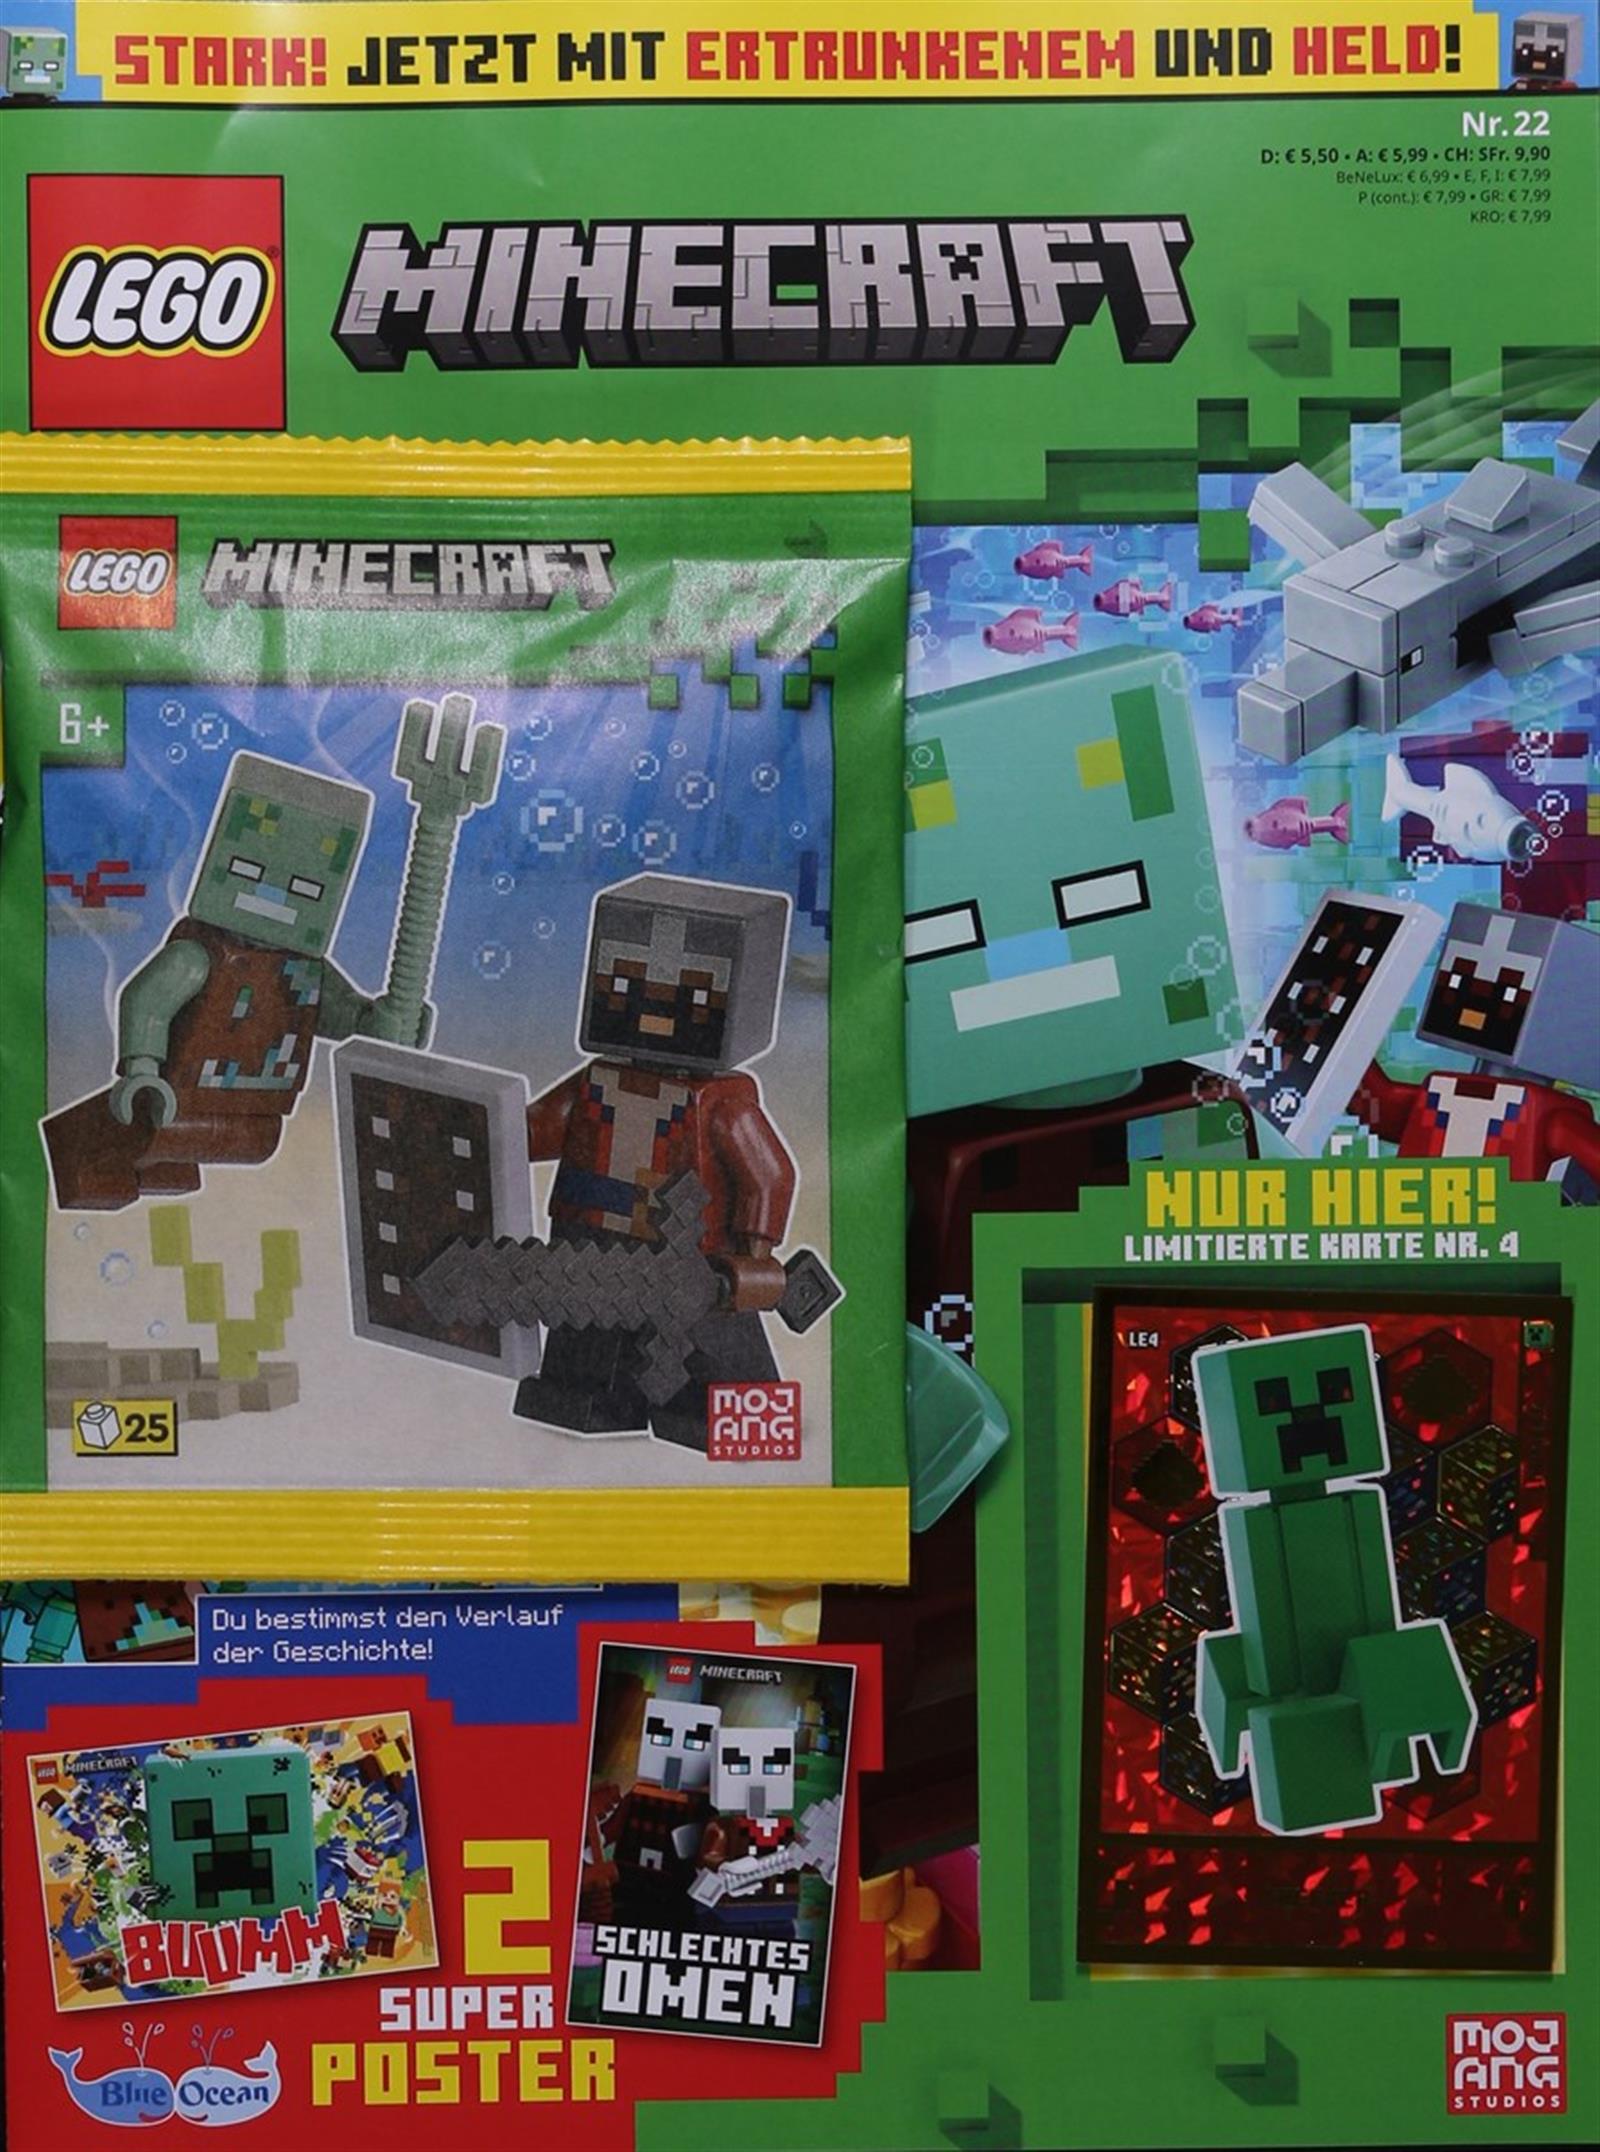 Das Cover des Lego Minecraft Magazins